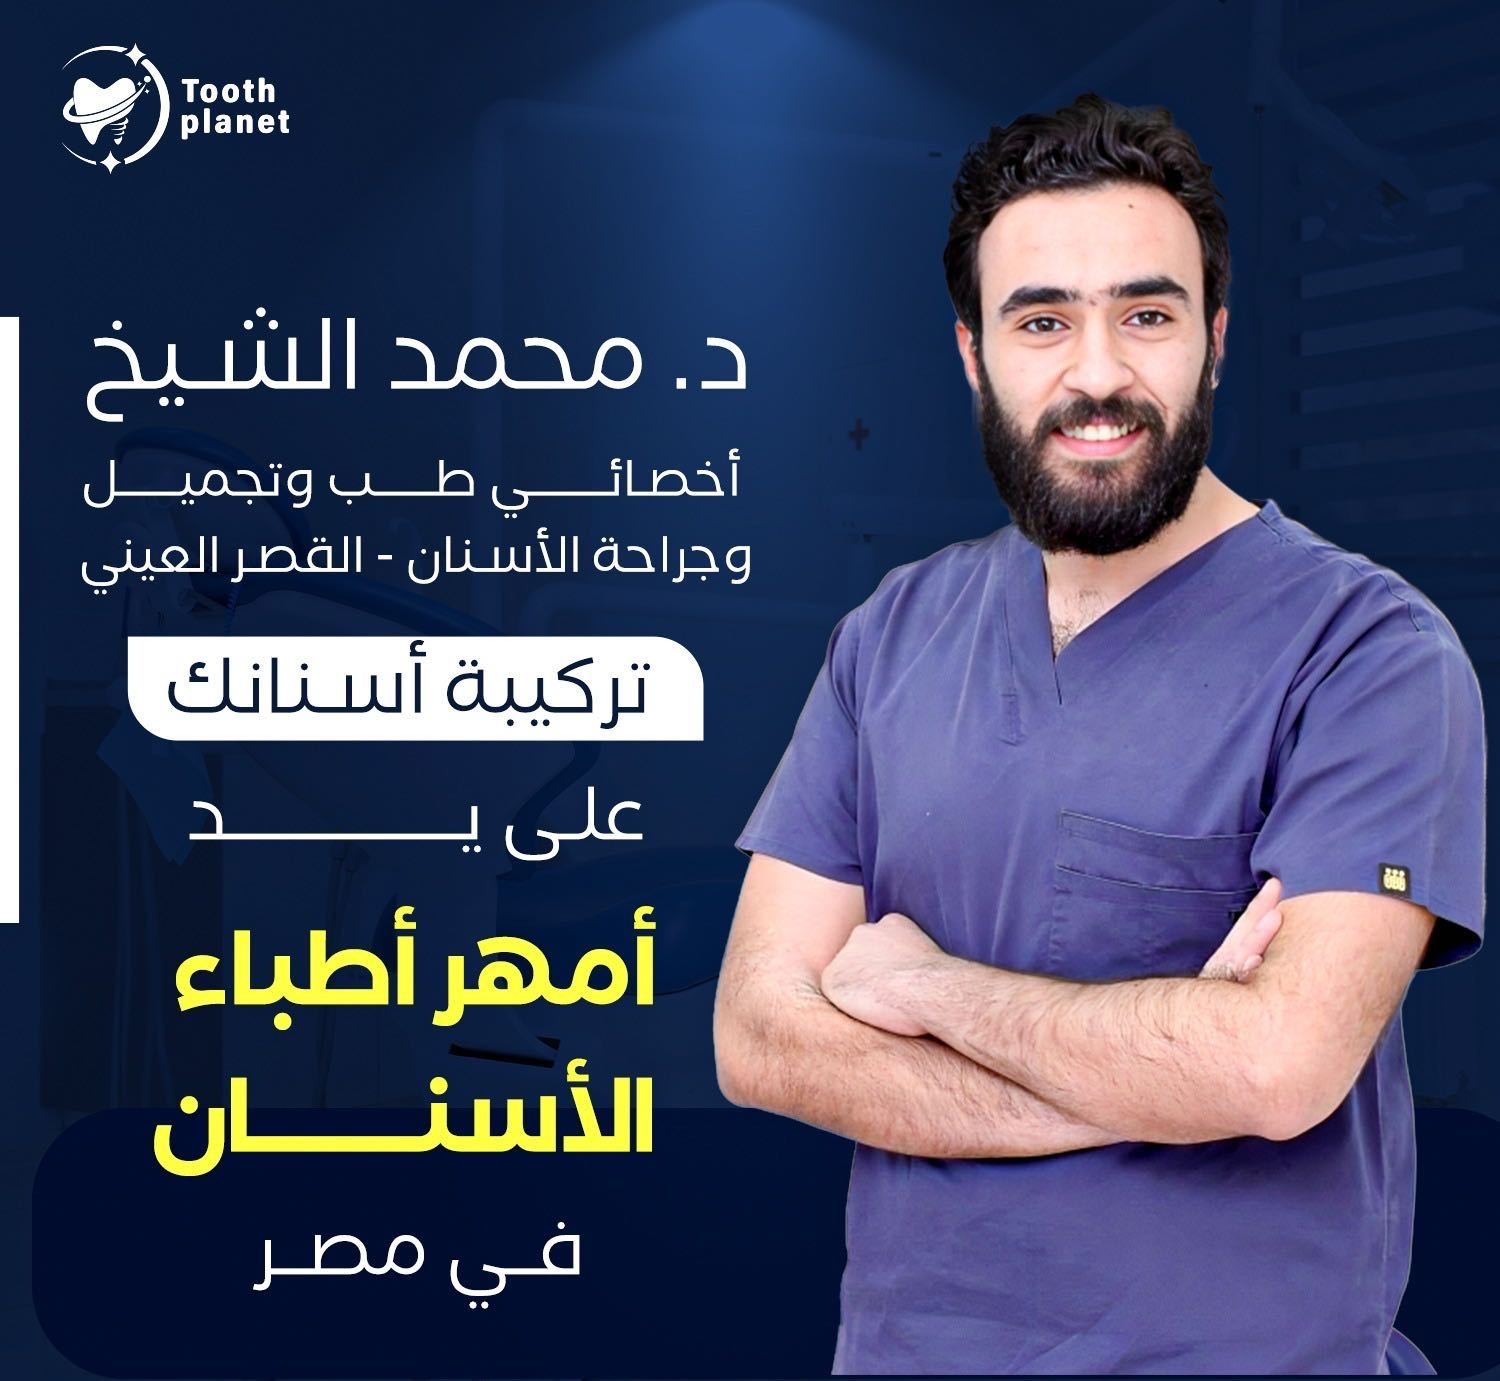 Dr. Mohamed Elsheikh